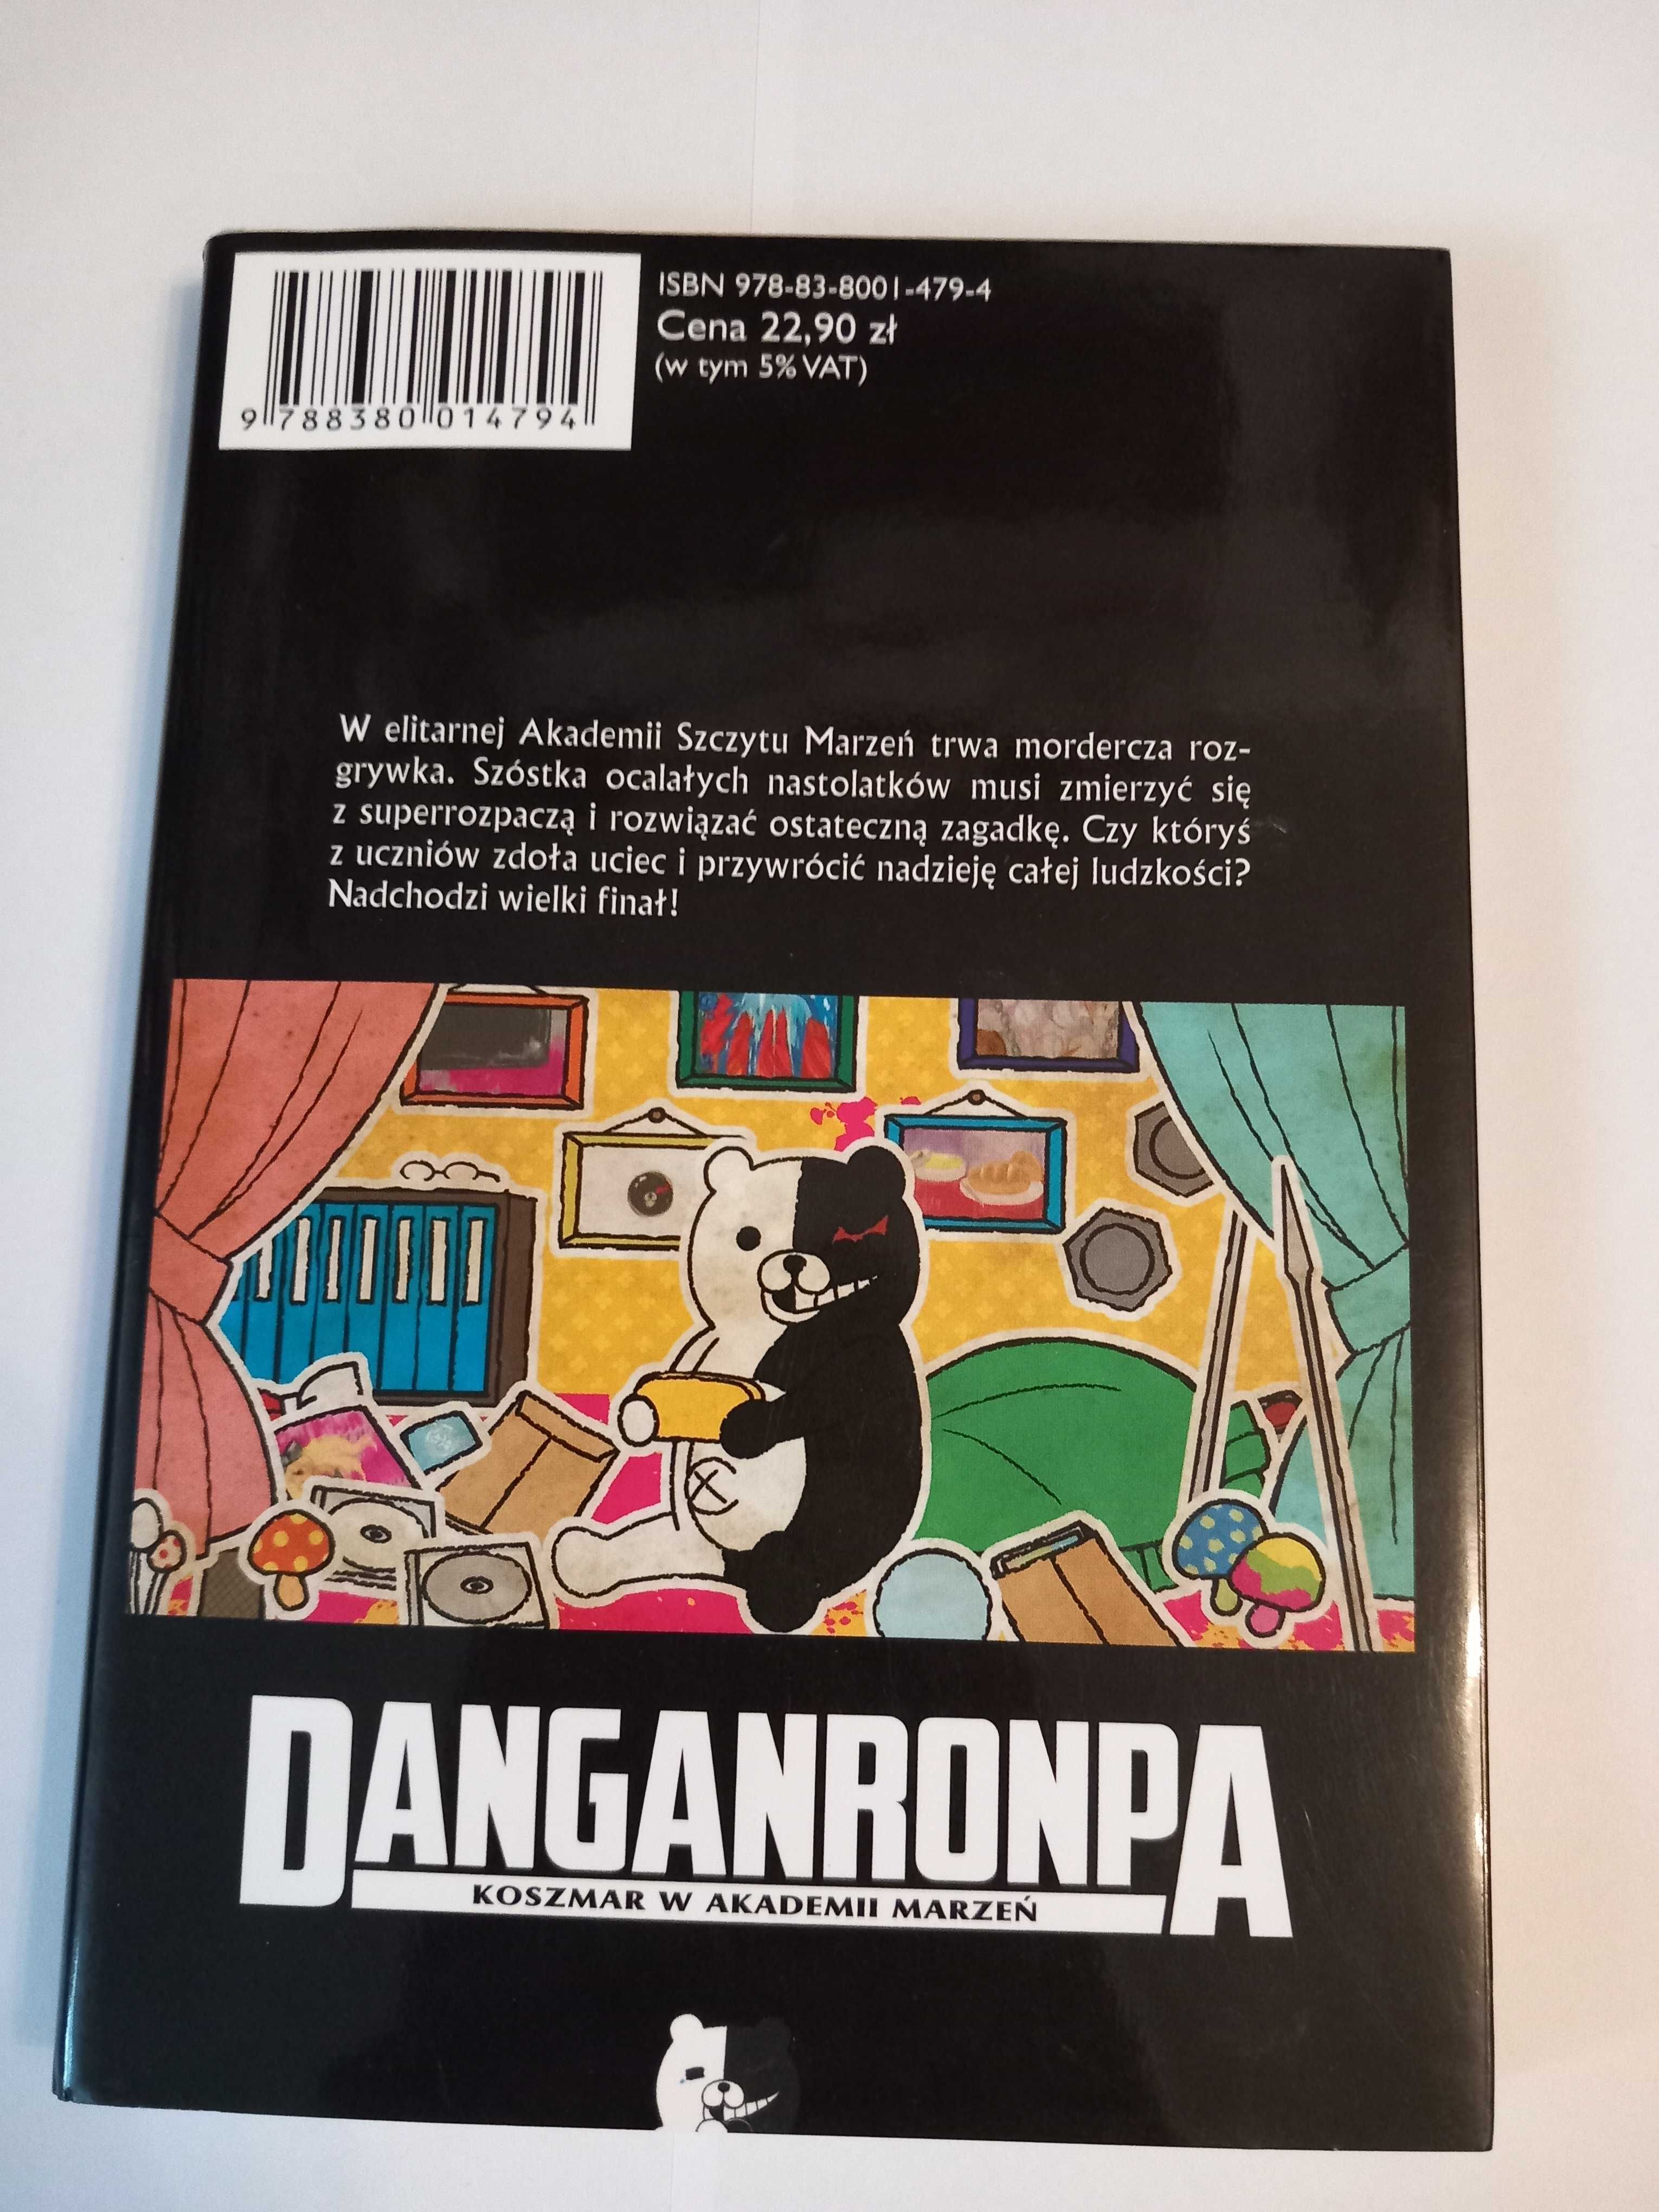 Manga "Danganronpa" tom 3 i 4